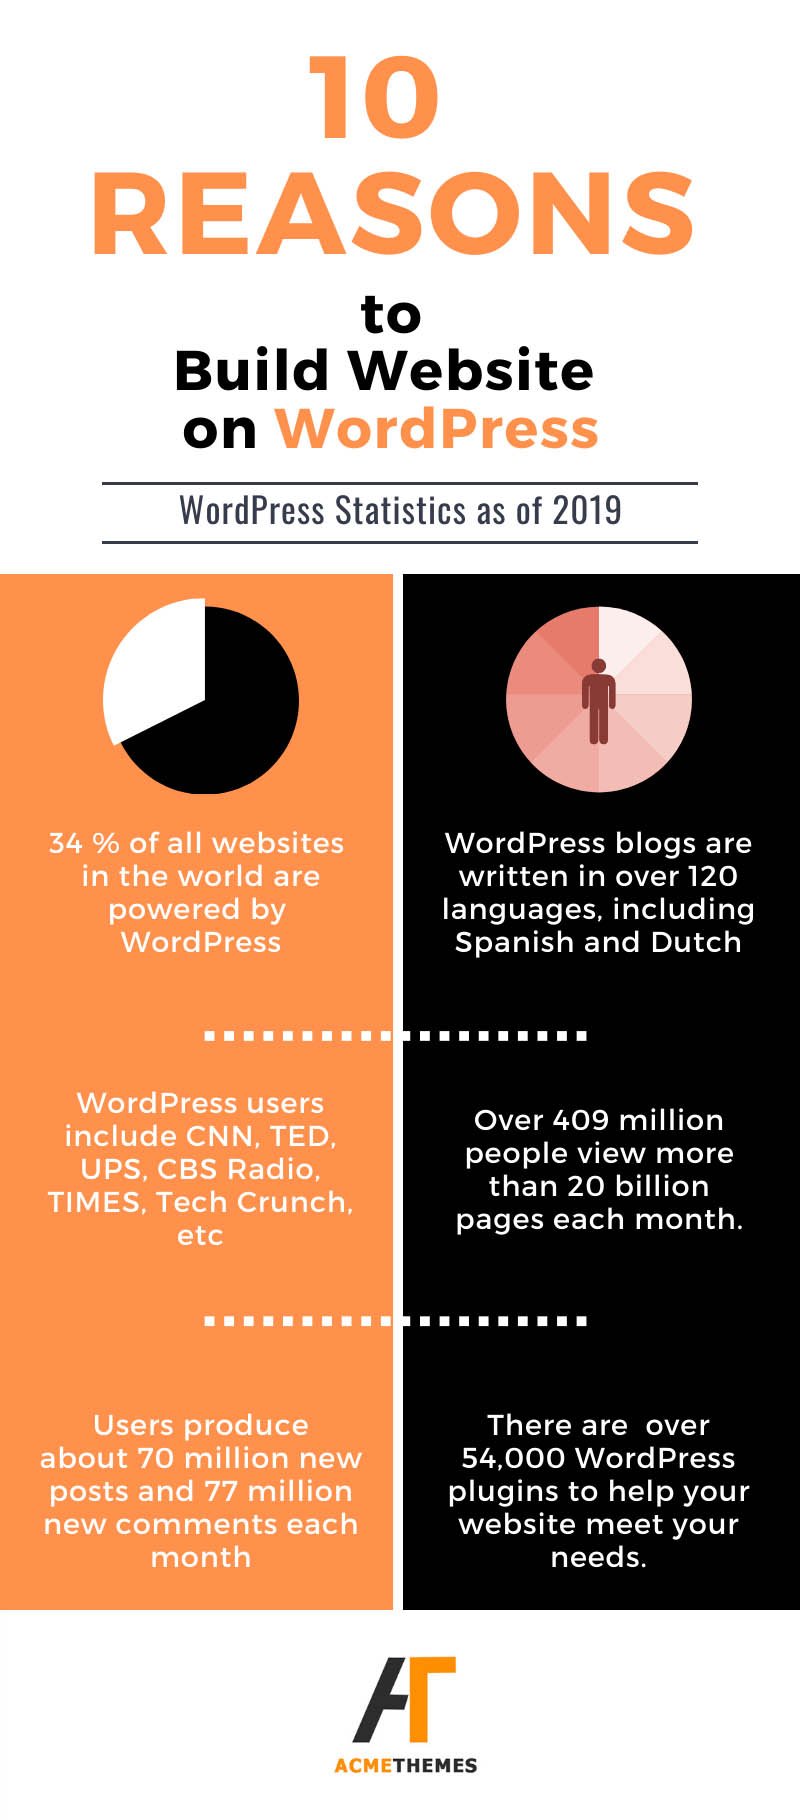 reasons to build website on WordPress